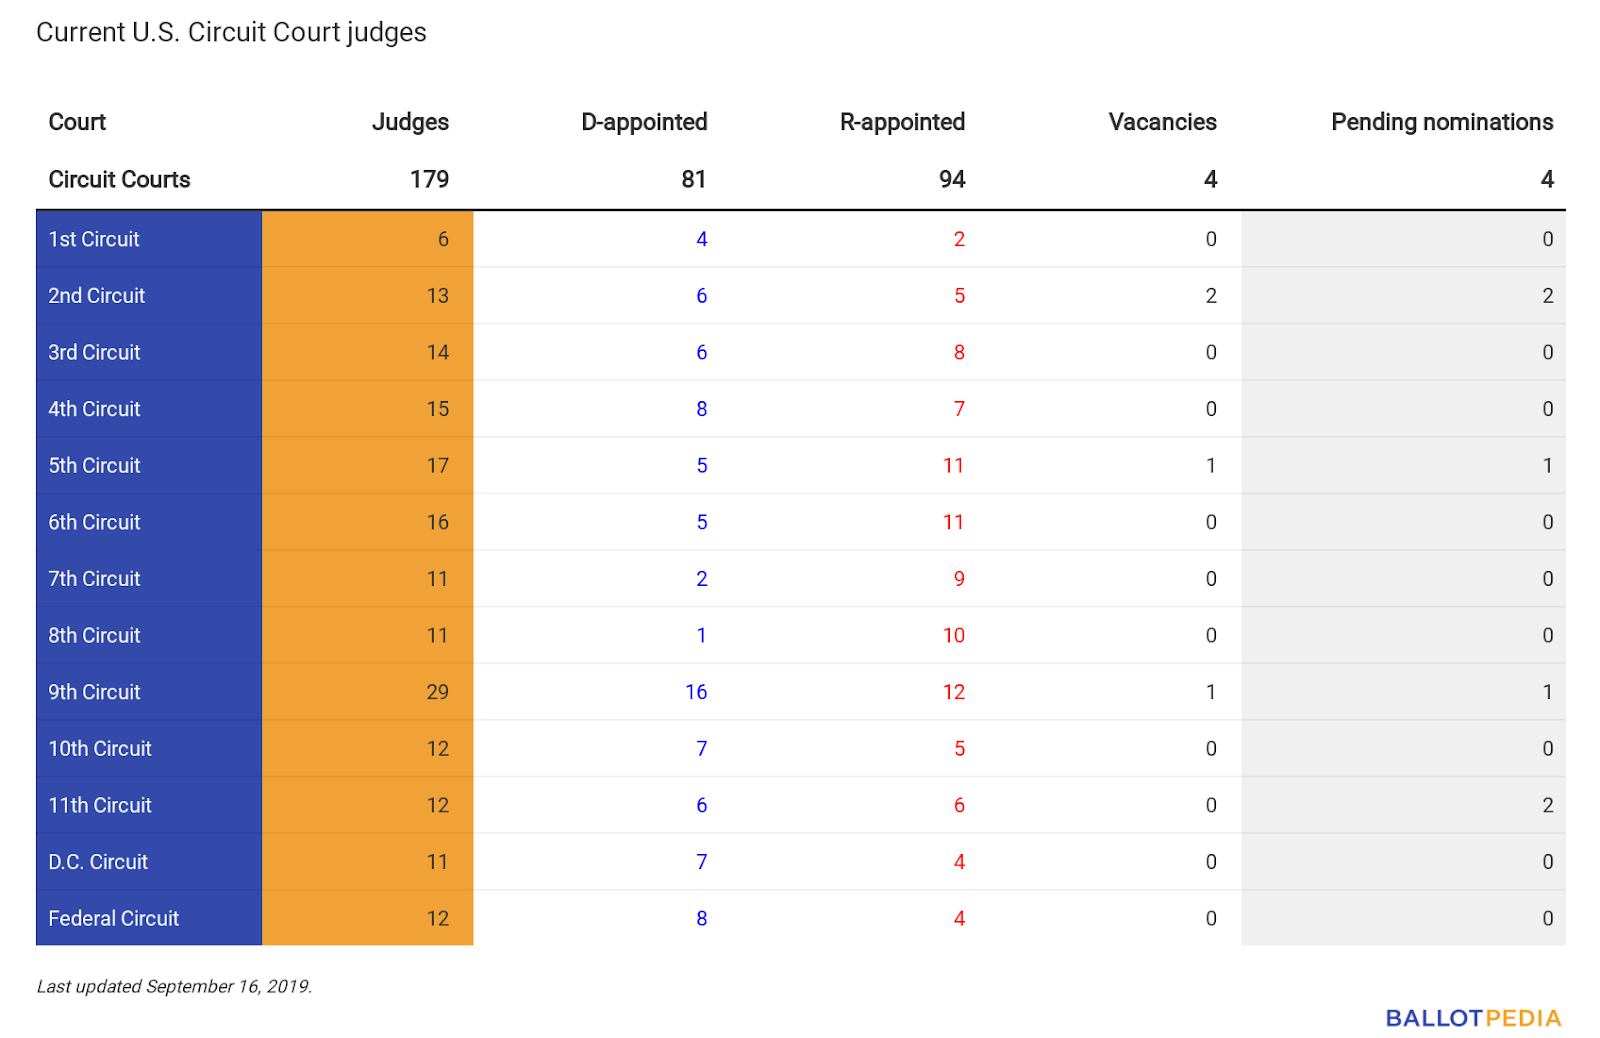 Current judges